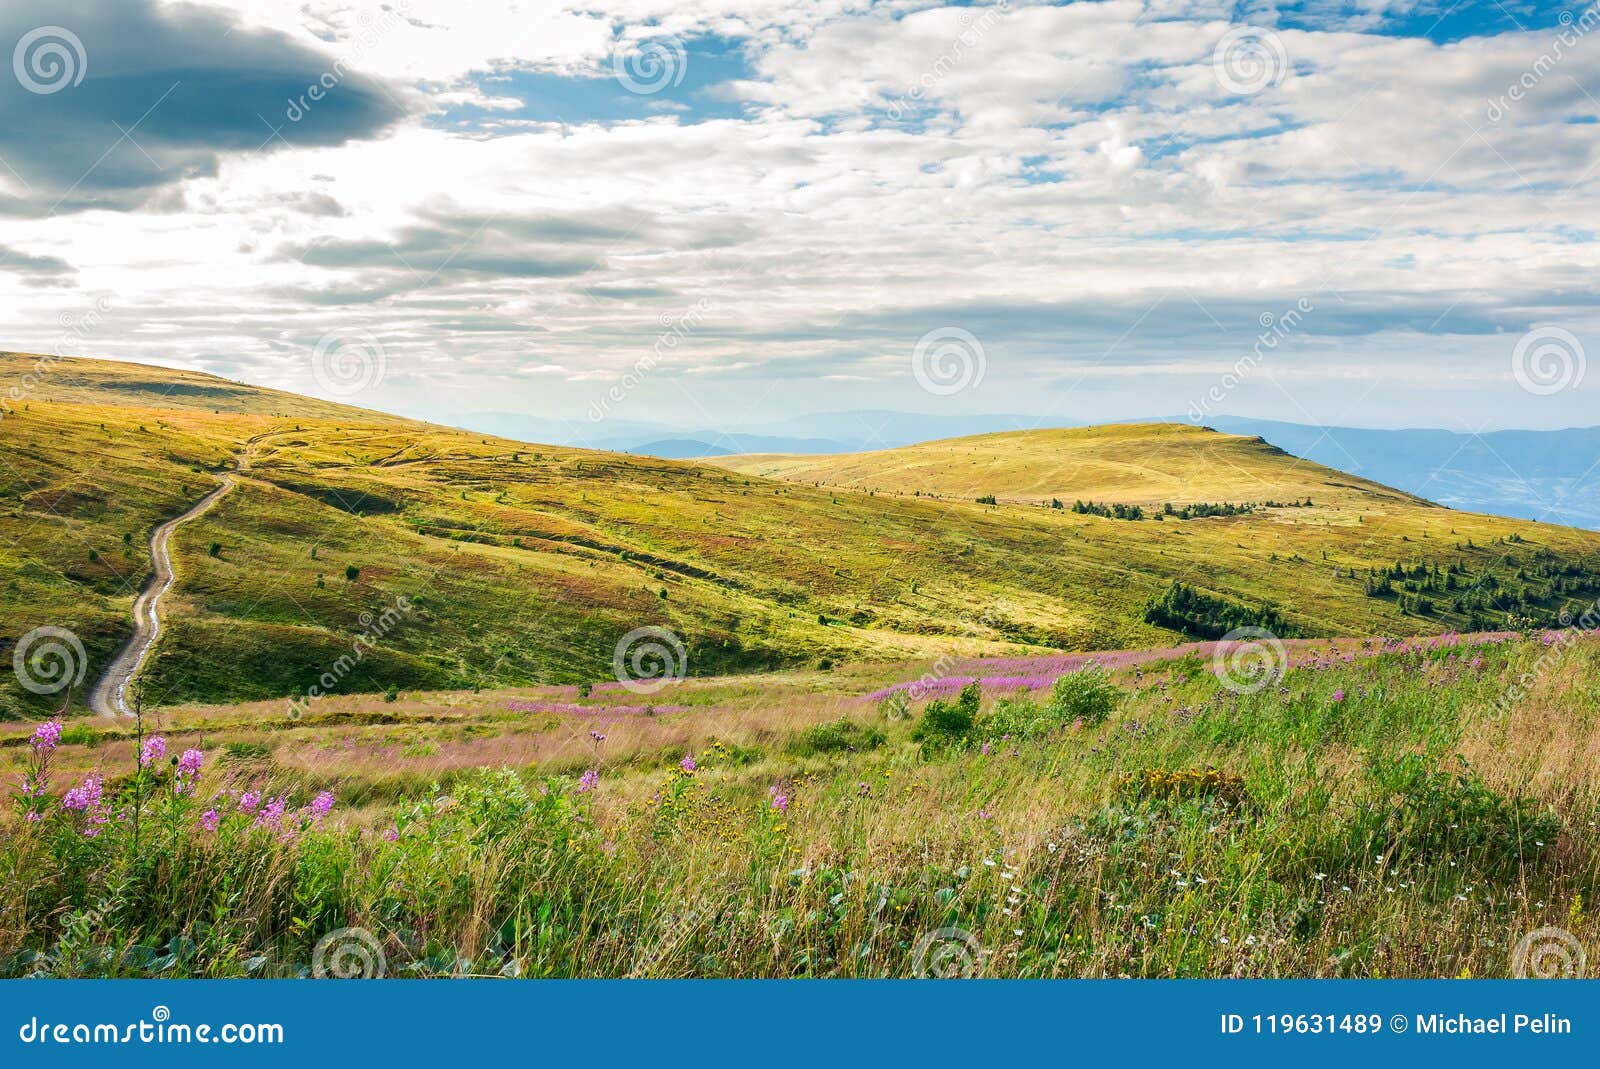 hills of runa mountain in late summer